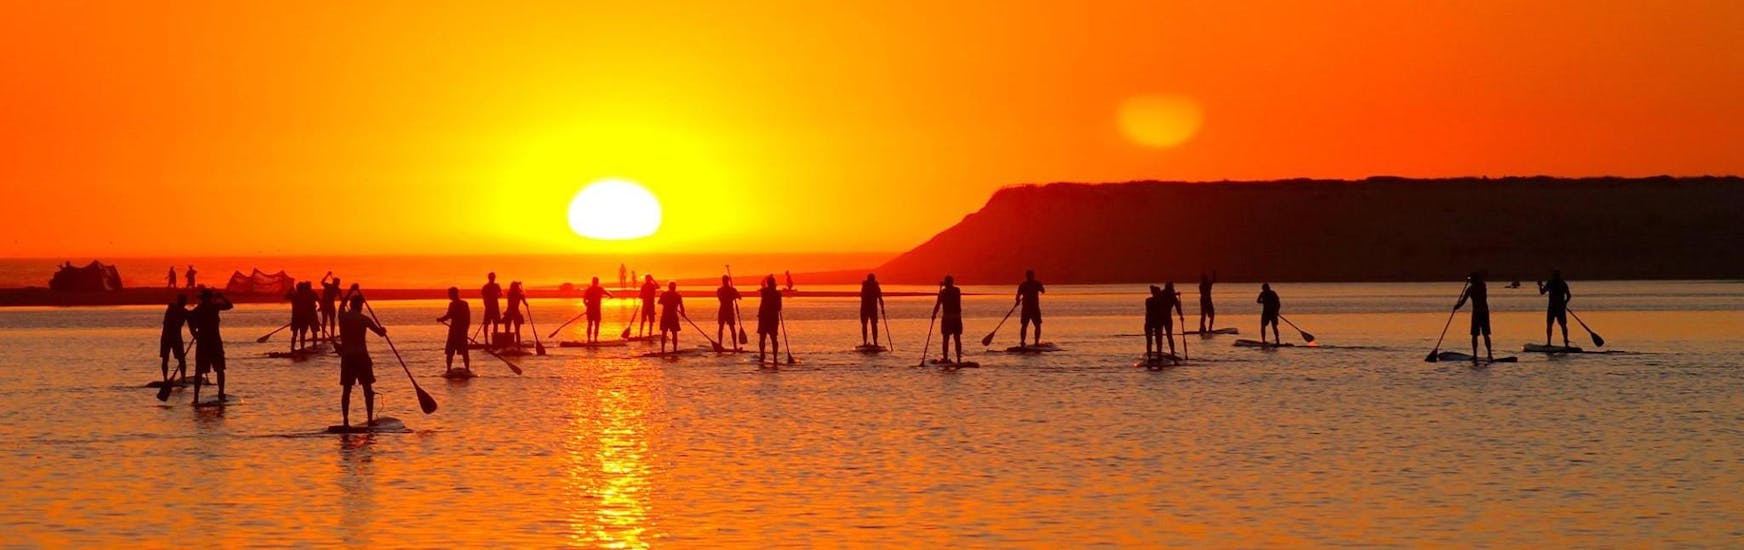 Die Teilnehmer des SUP-Kurses an der Lagoa de Albufeira in Sesimbra mit Meira Pro Sesimbra paddeln gemeinsam in den Sonnenuntergang.